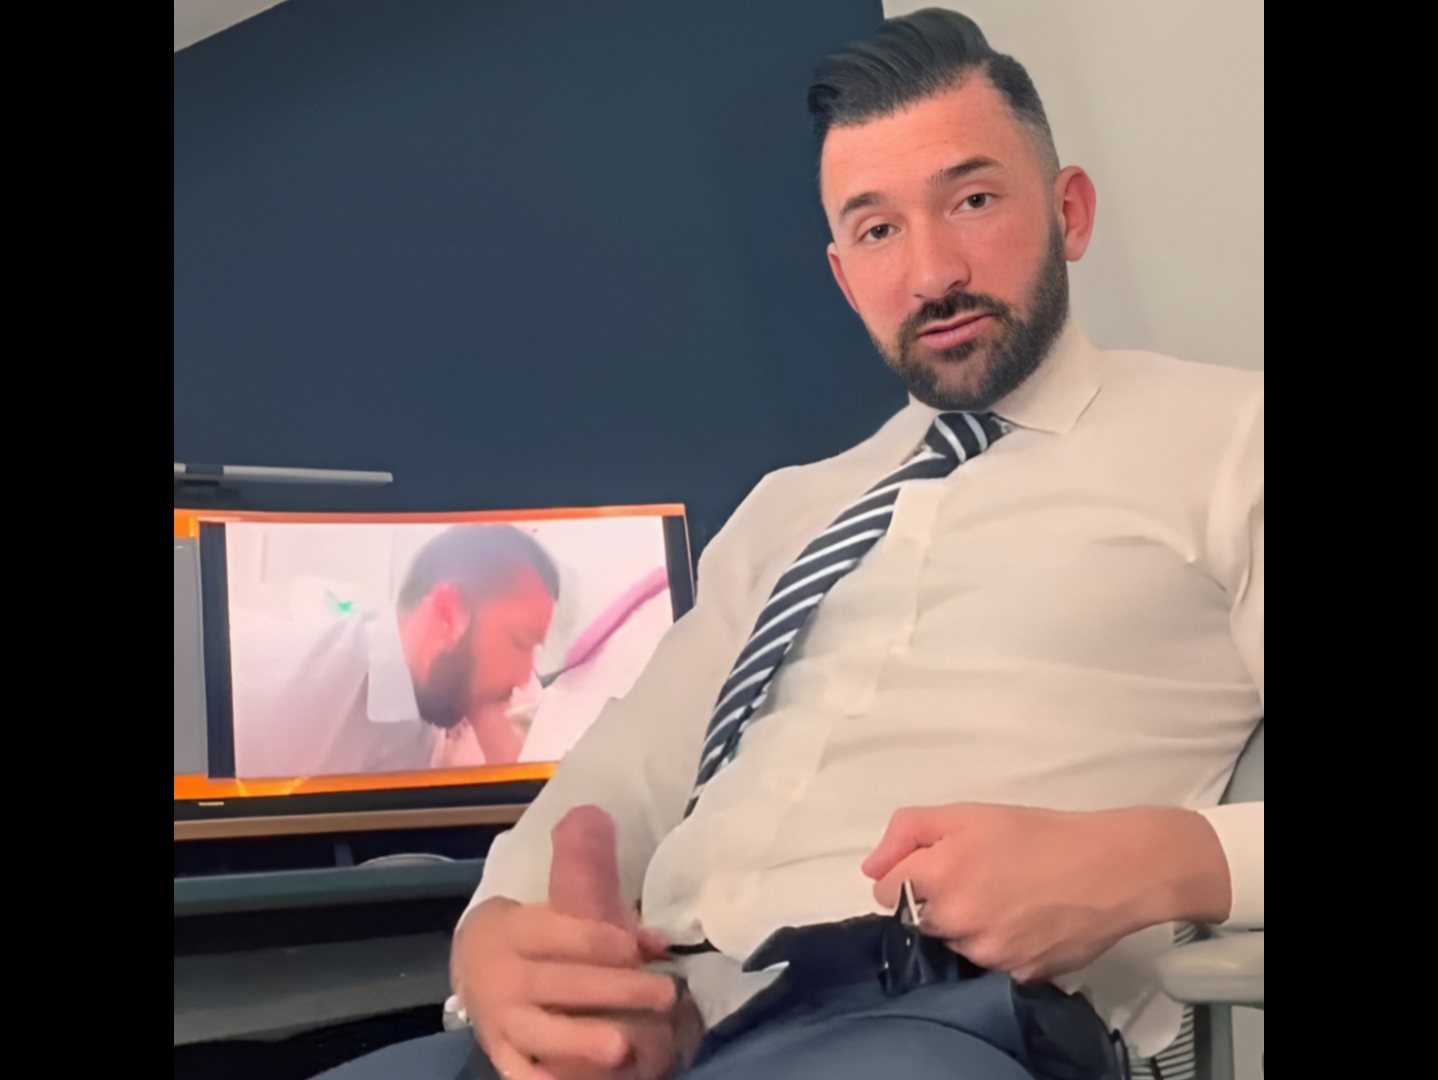 Executive Man Masturbating in the Office